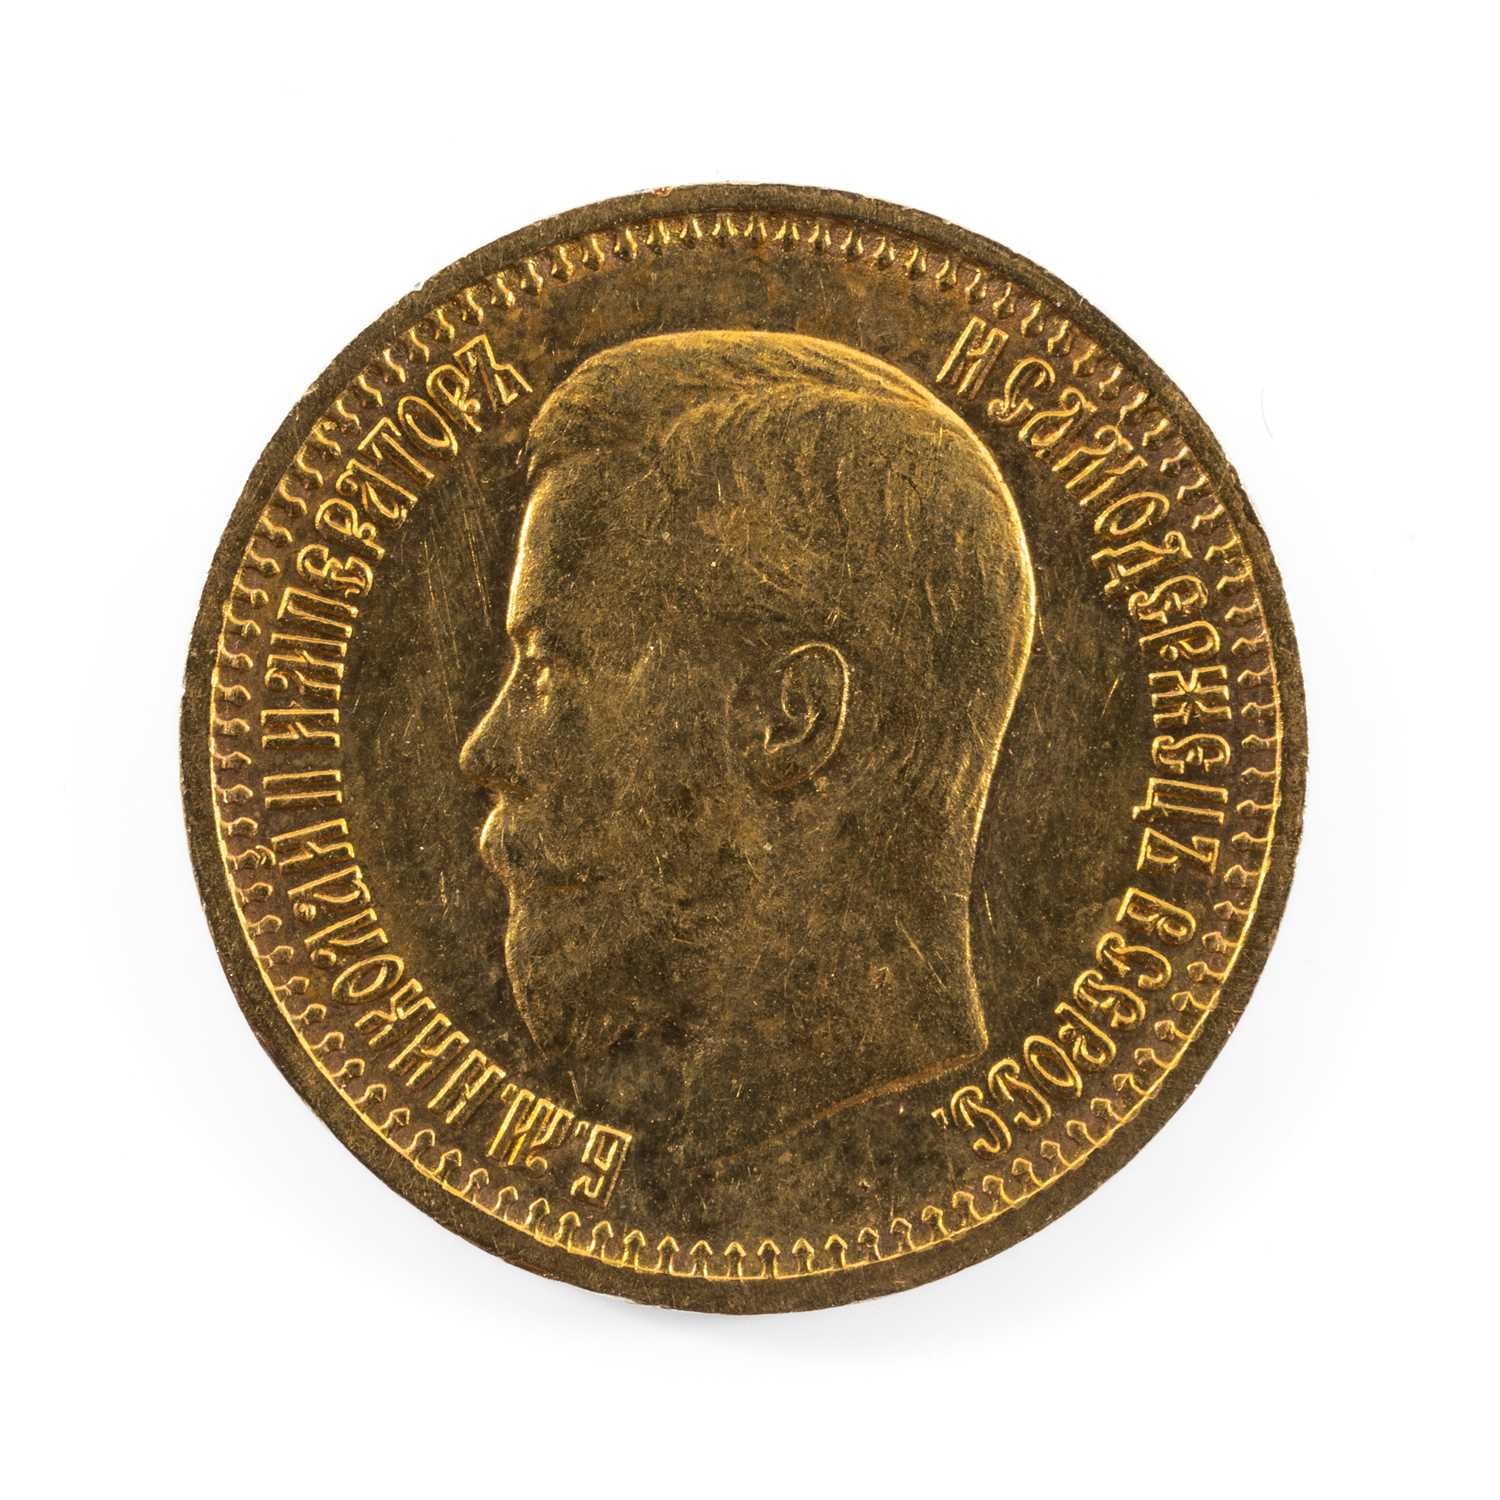 CZAR NICHOLAS II RUSSIAN 7 ROUBLES 50 KOPEKS GOLD COIN, 1897, 6.4gms Provenance: private - Image 2 of 2